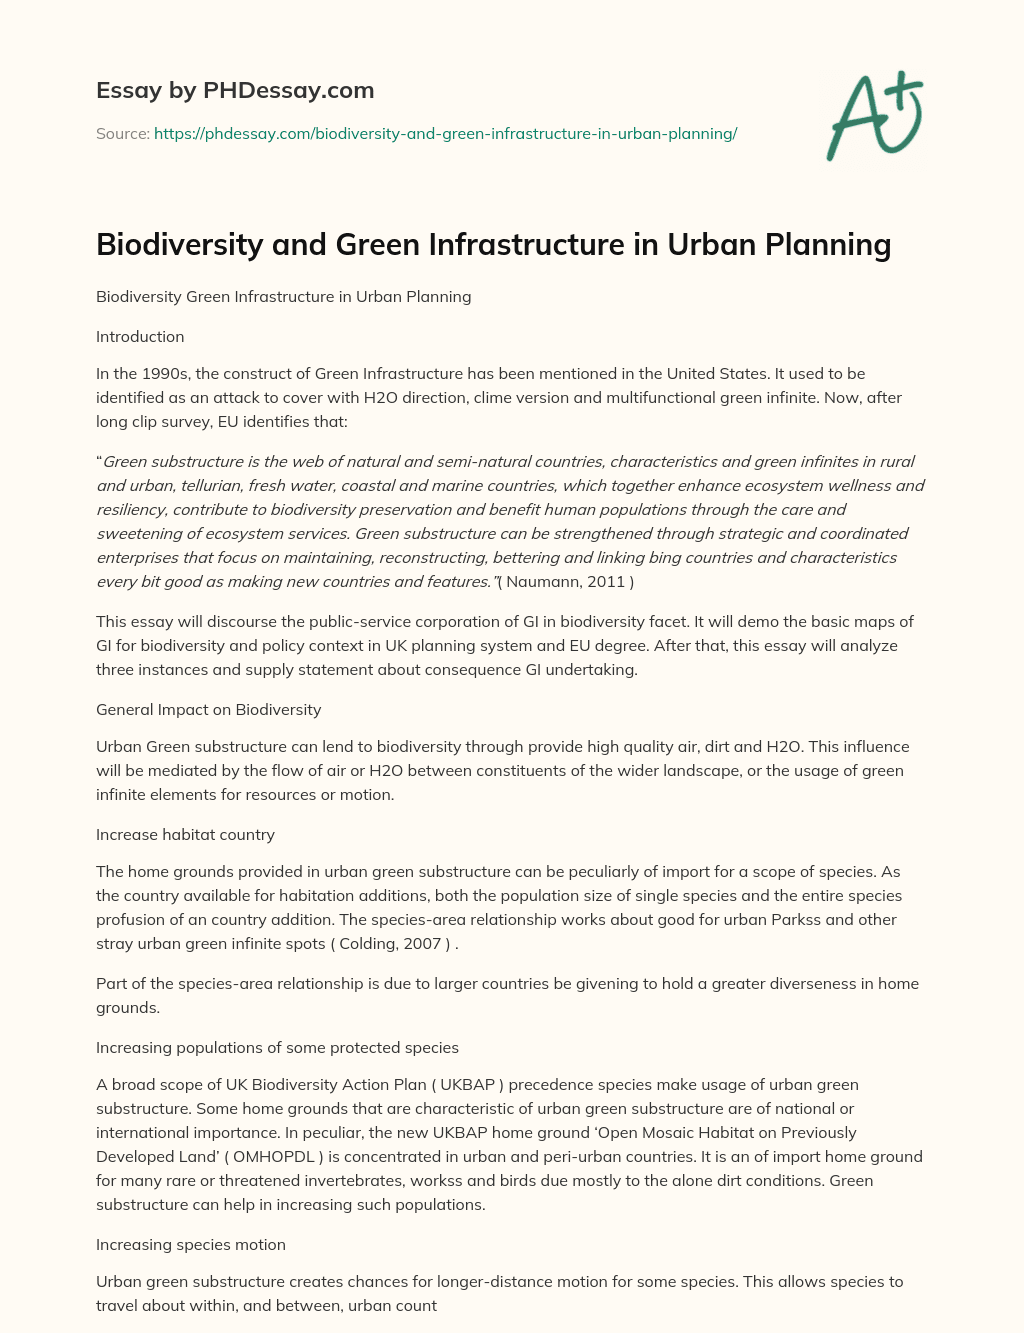 Biodiversity and Green Infrastructure in Urban Planning essay